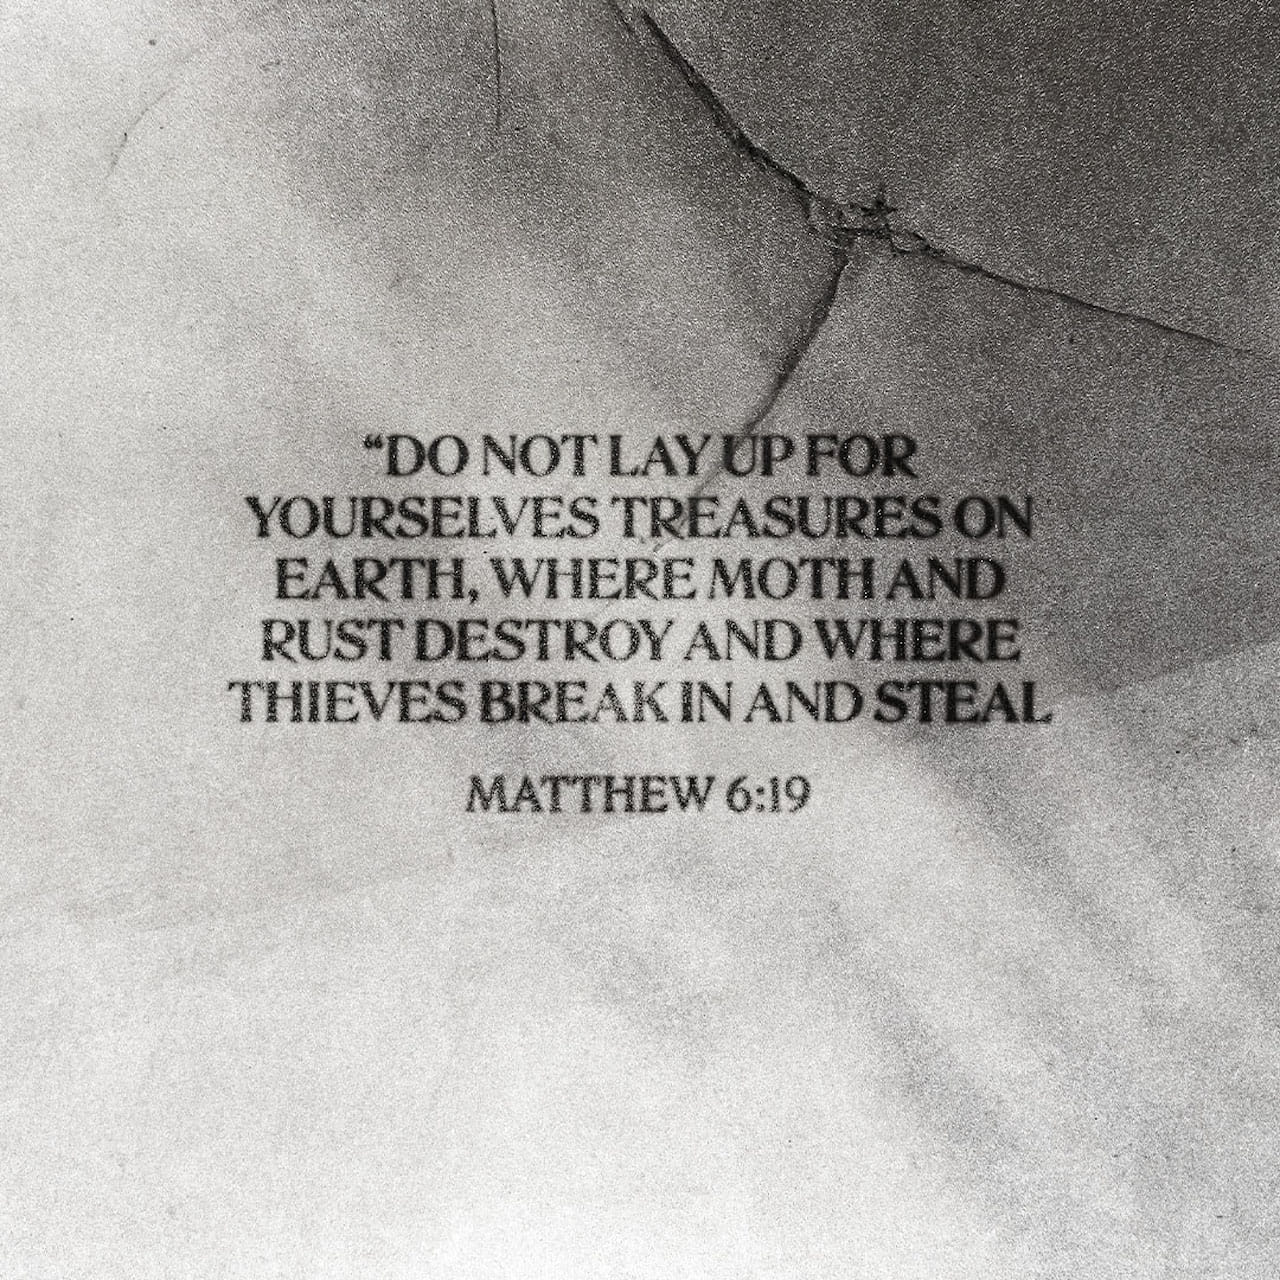 matthew 6:24 niv